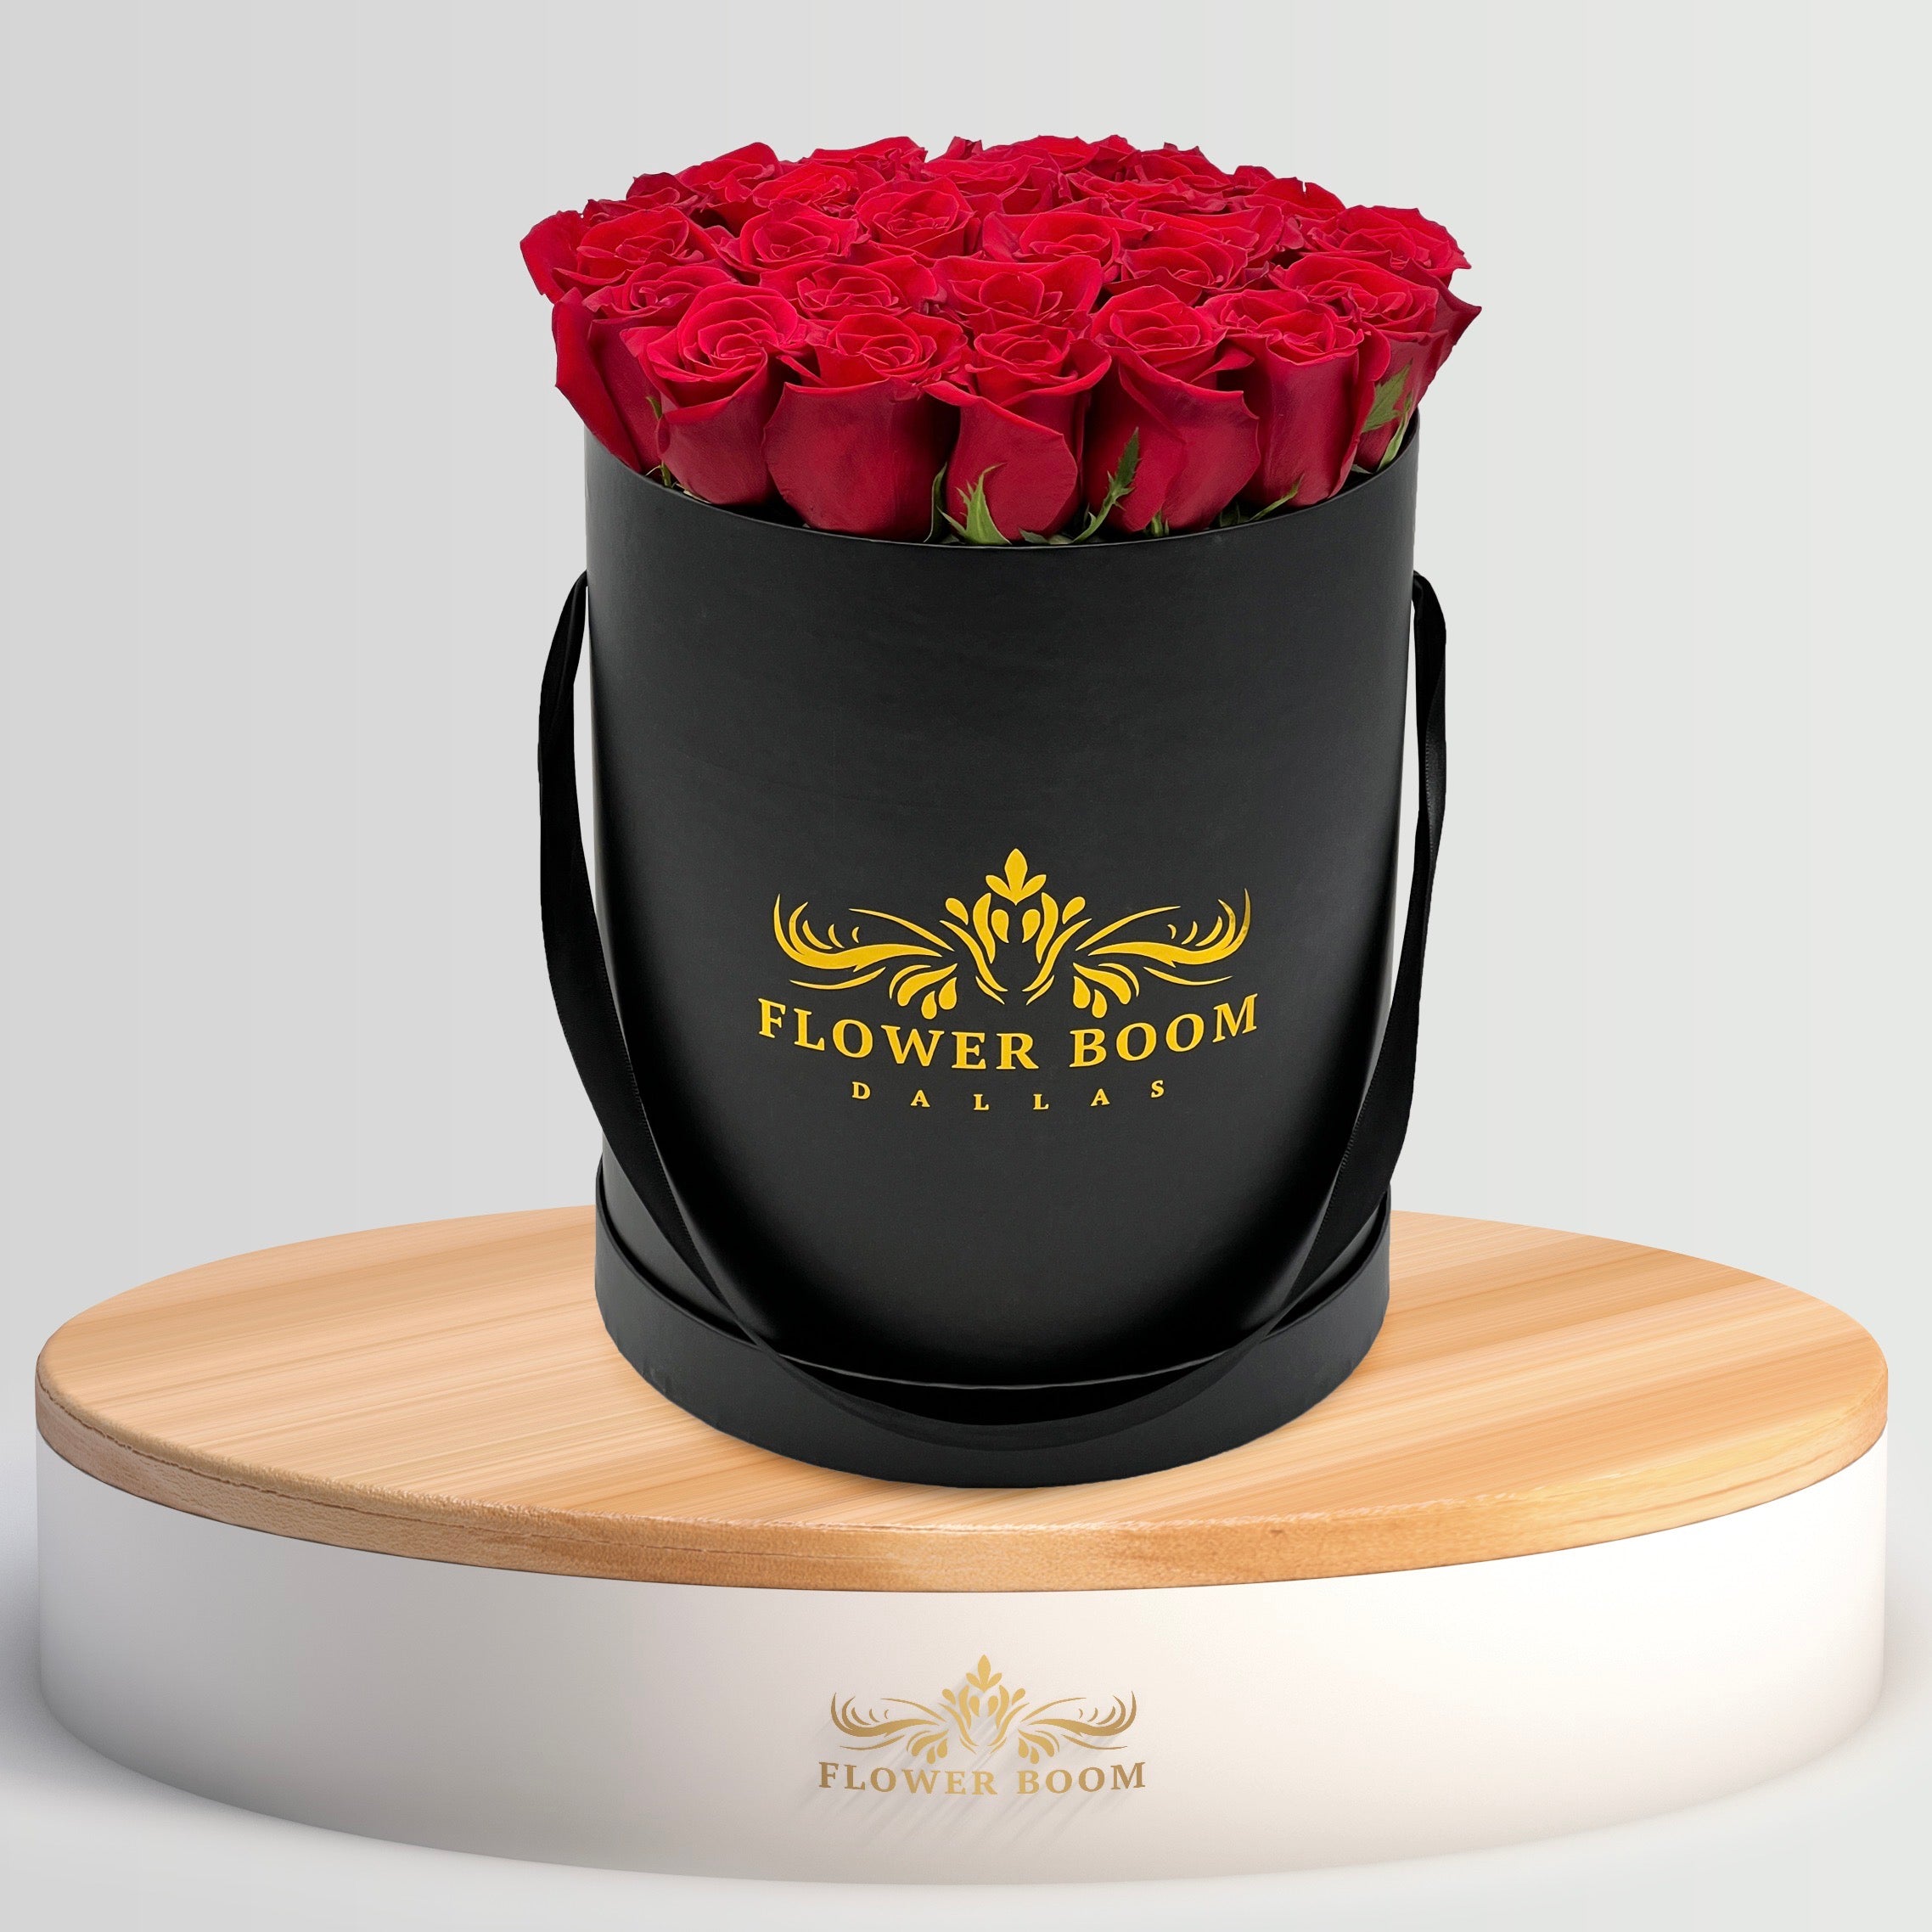 2 dozen red roses in a black box